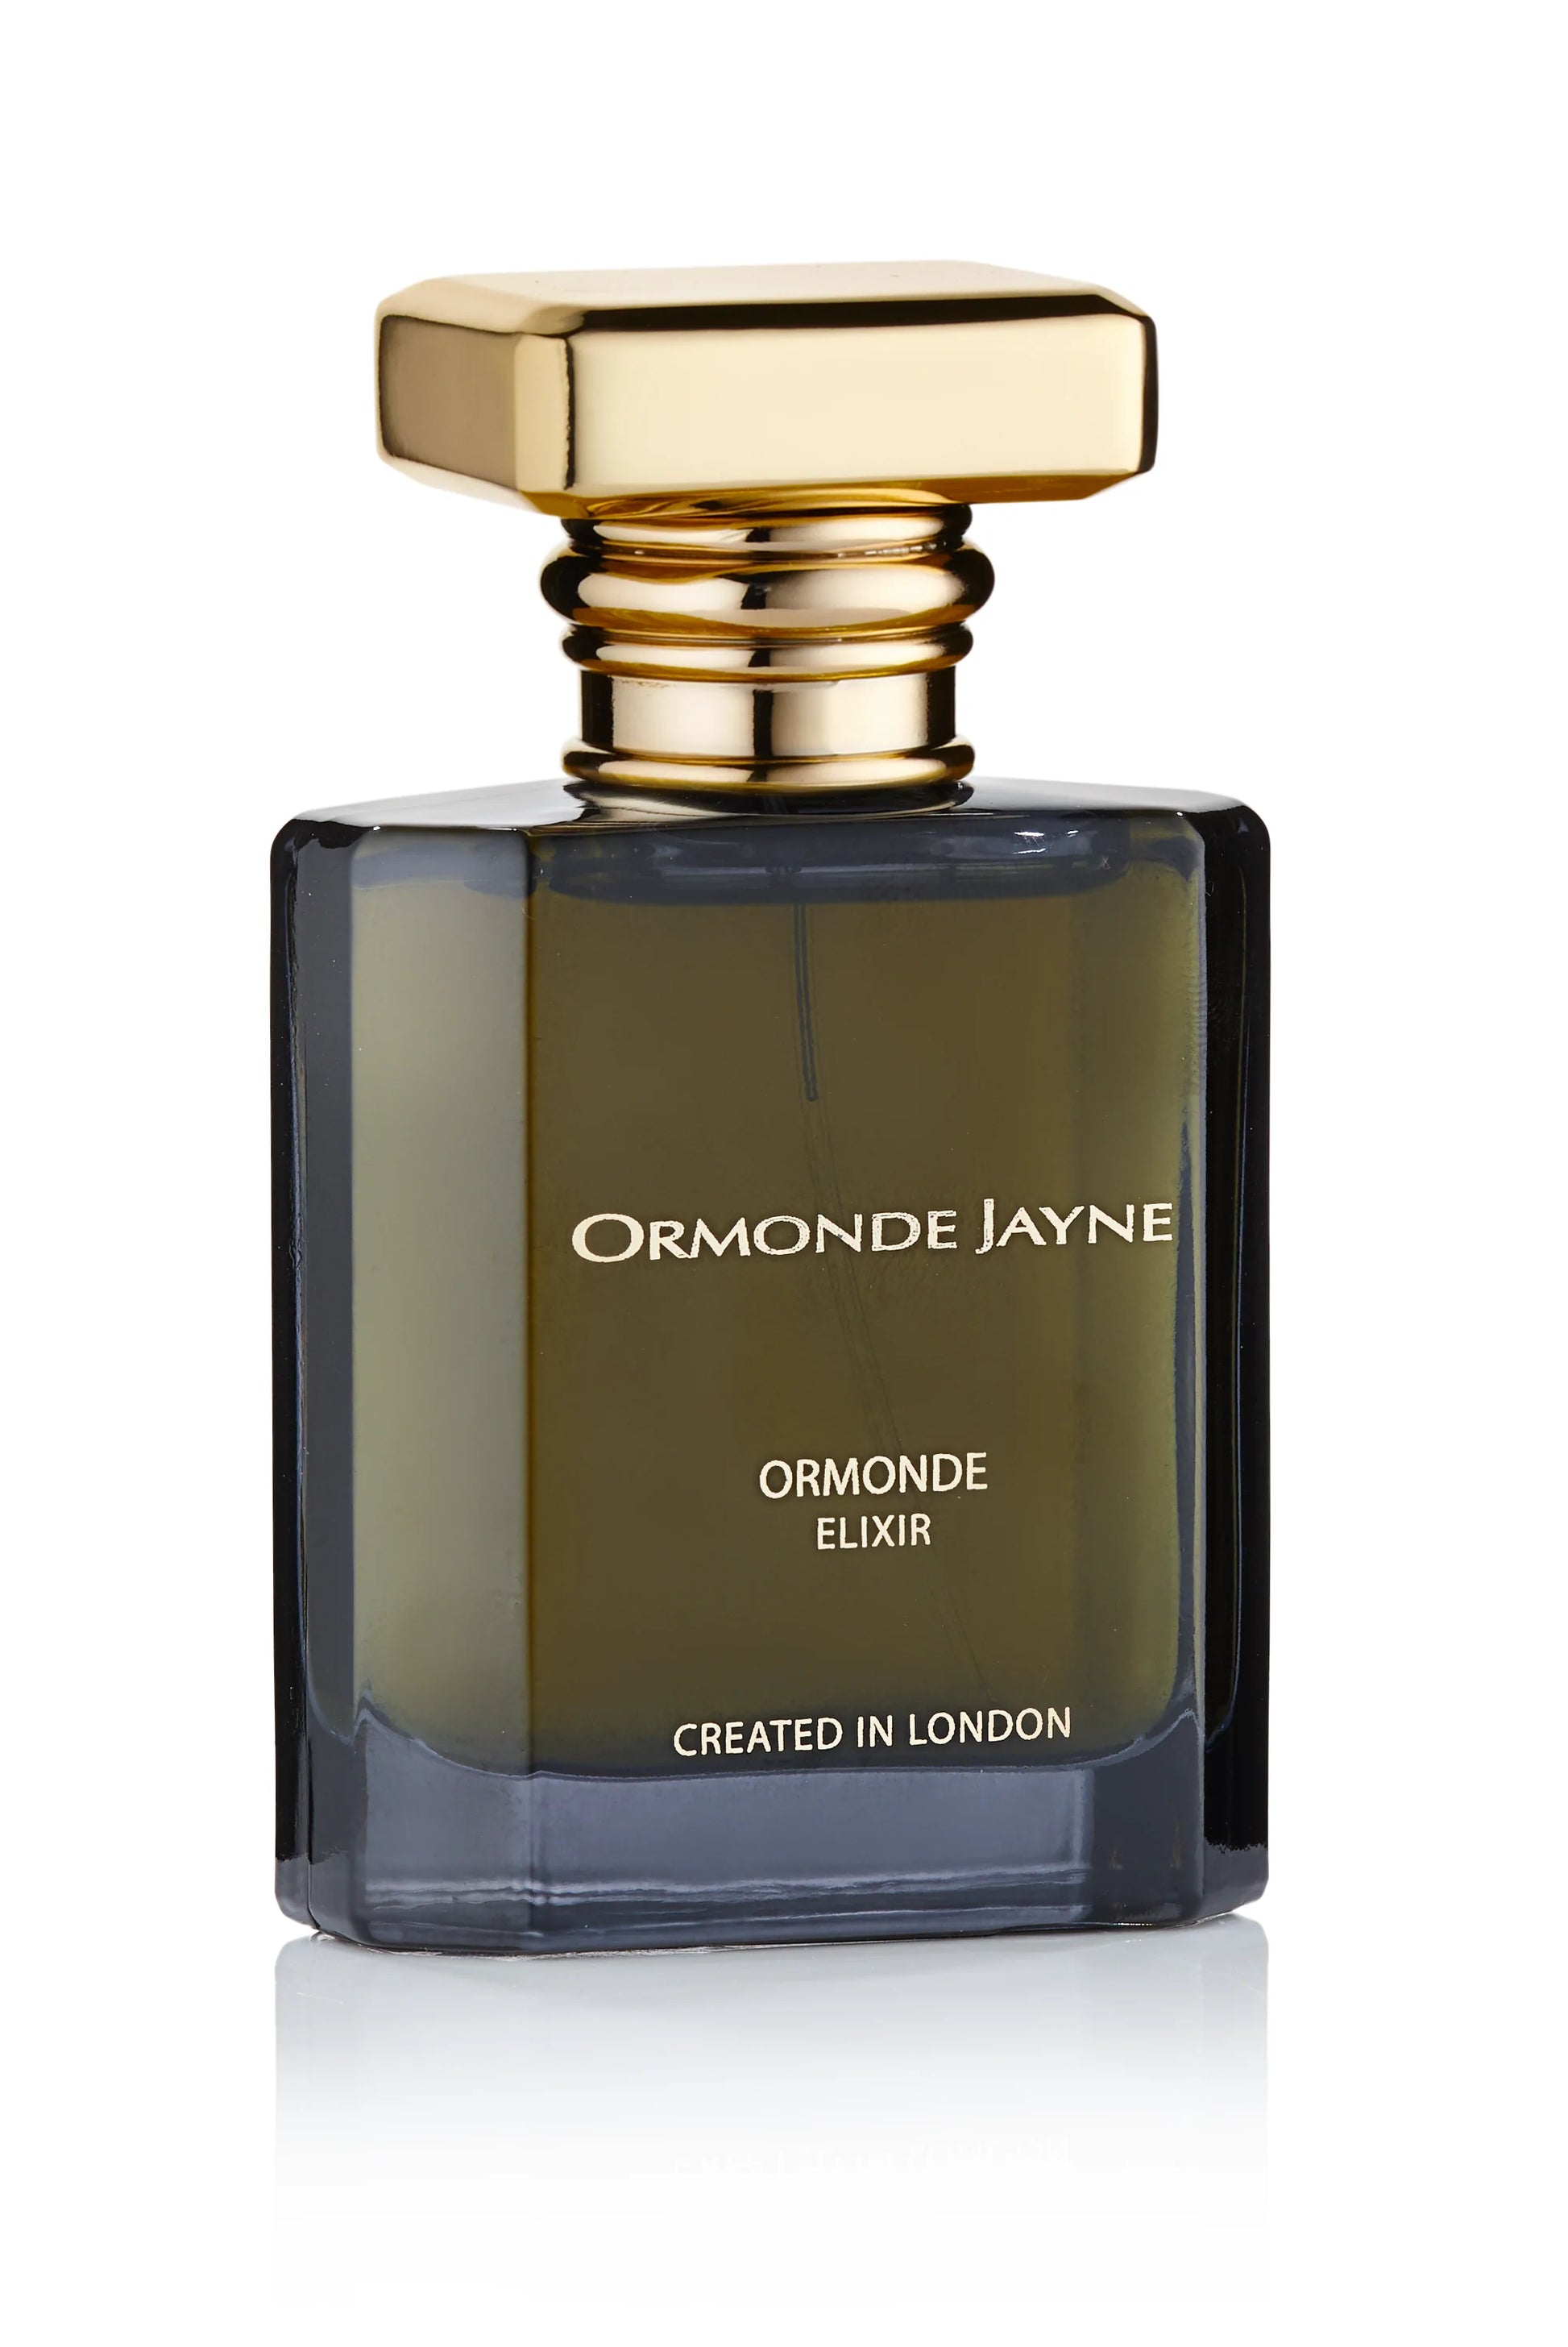 Ormonde Jayne Ormonde Elixir 2ml 0.06 fl。 オンス公式フレグランスサンプル